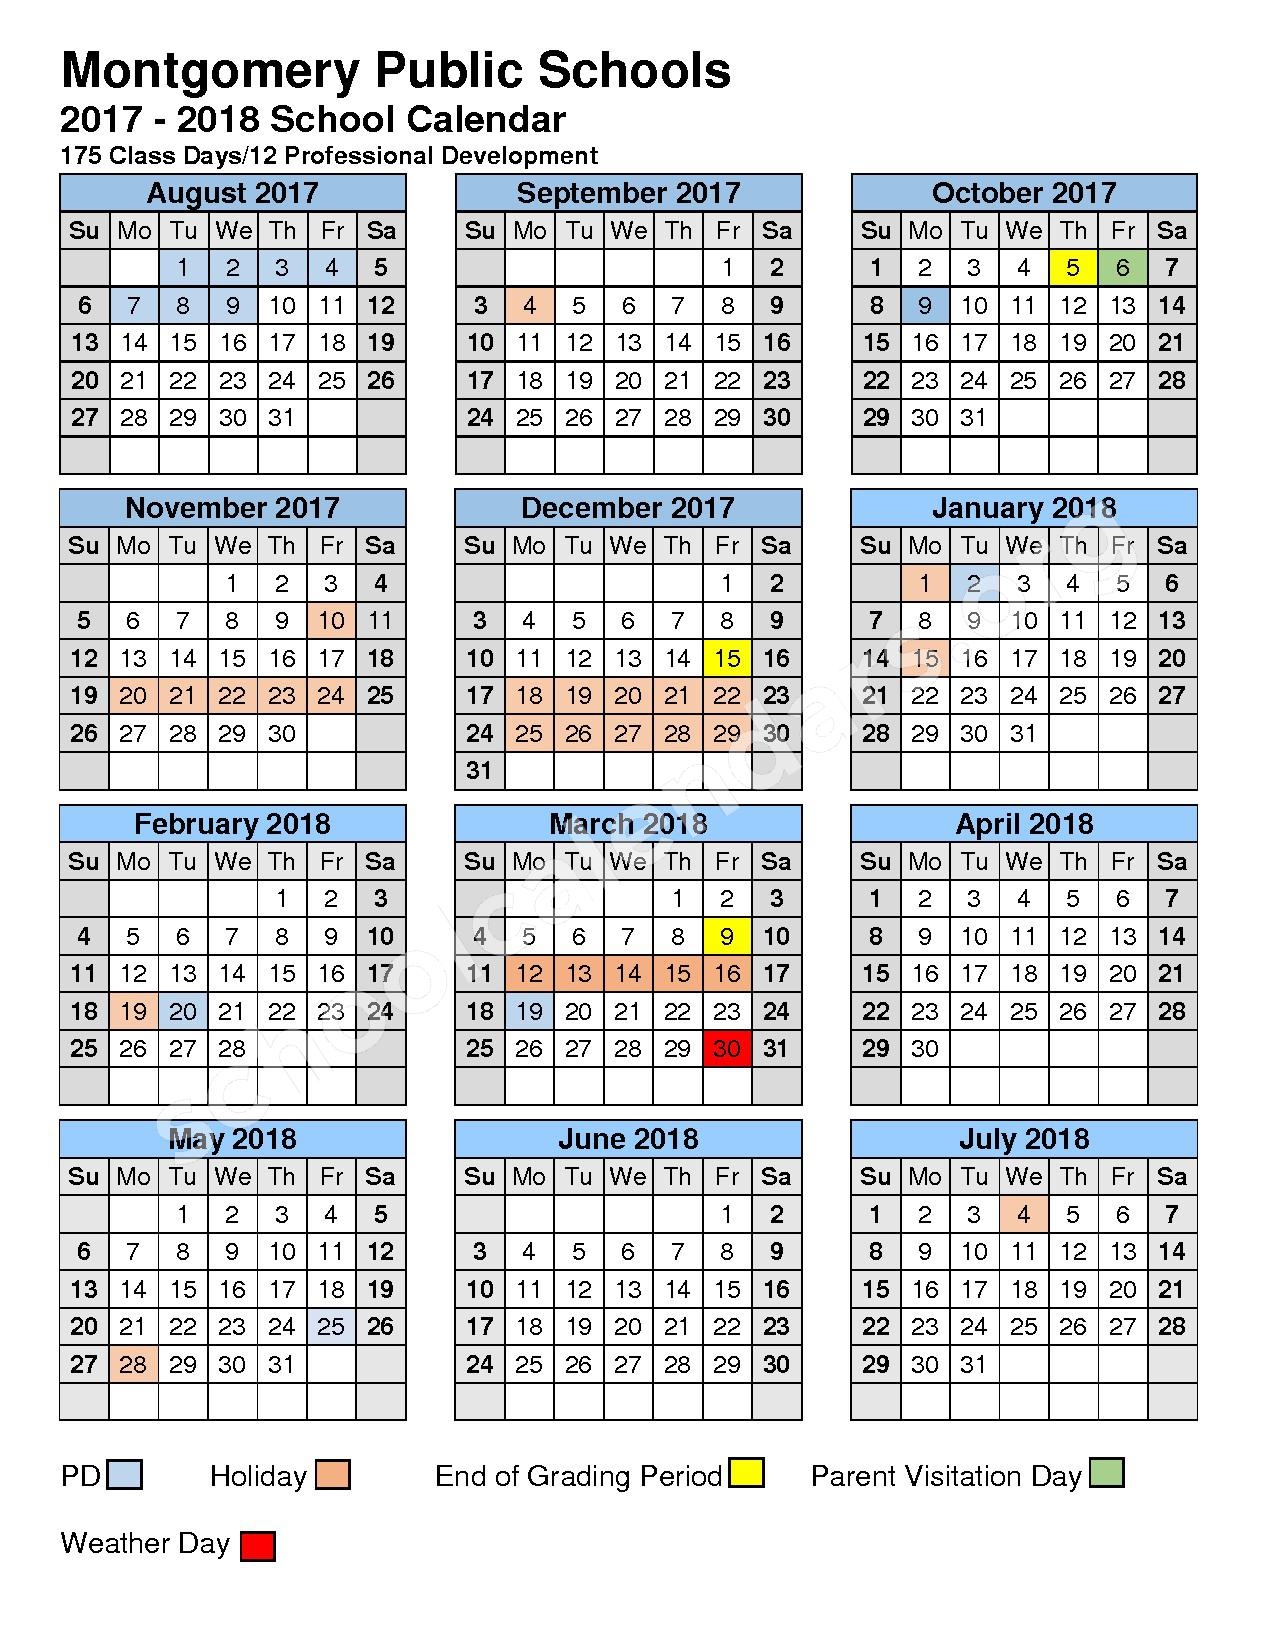 montgomery-county-public-school-calendar-qualads